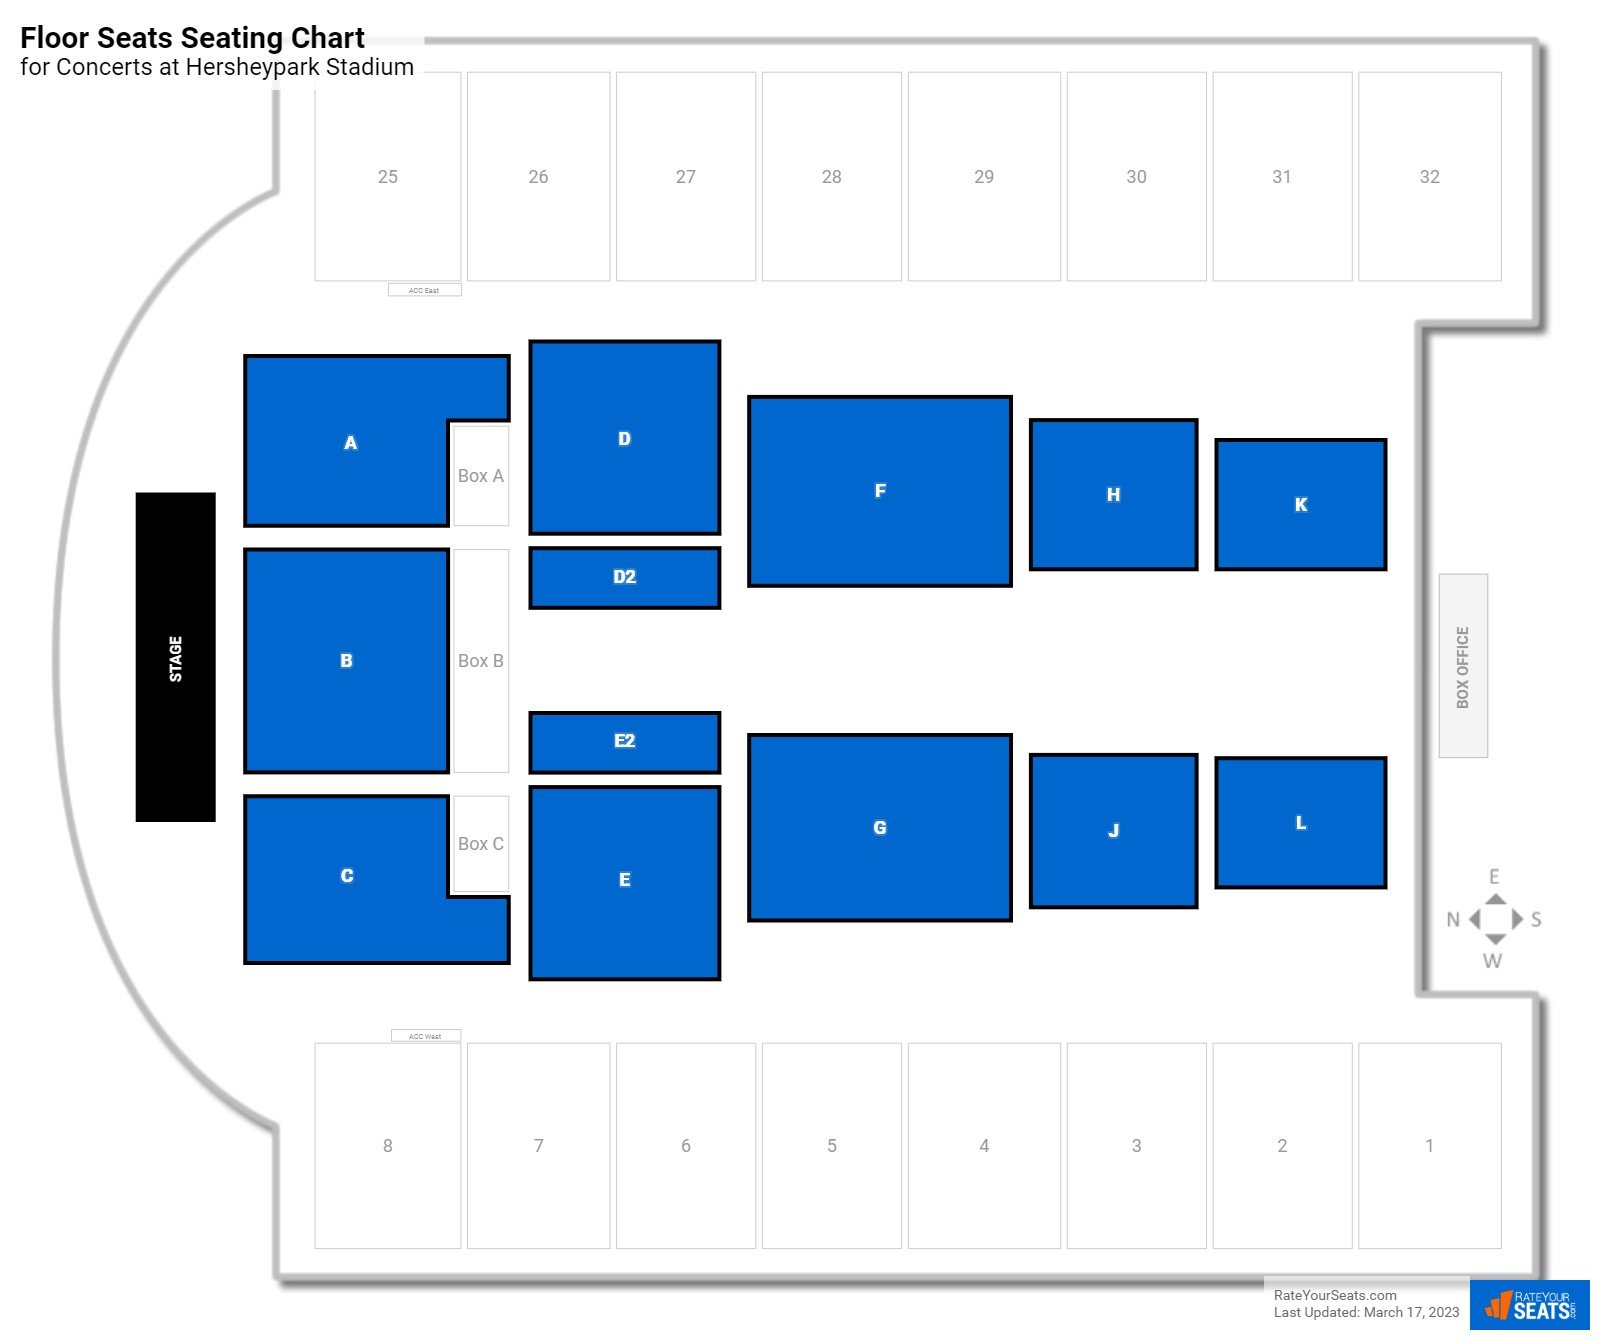 Concert Floor Seats Seating Chart at Hersheypark Stadium